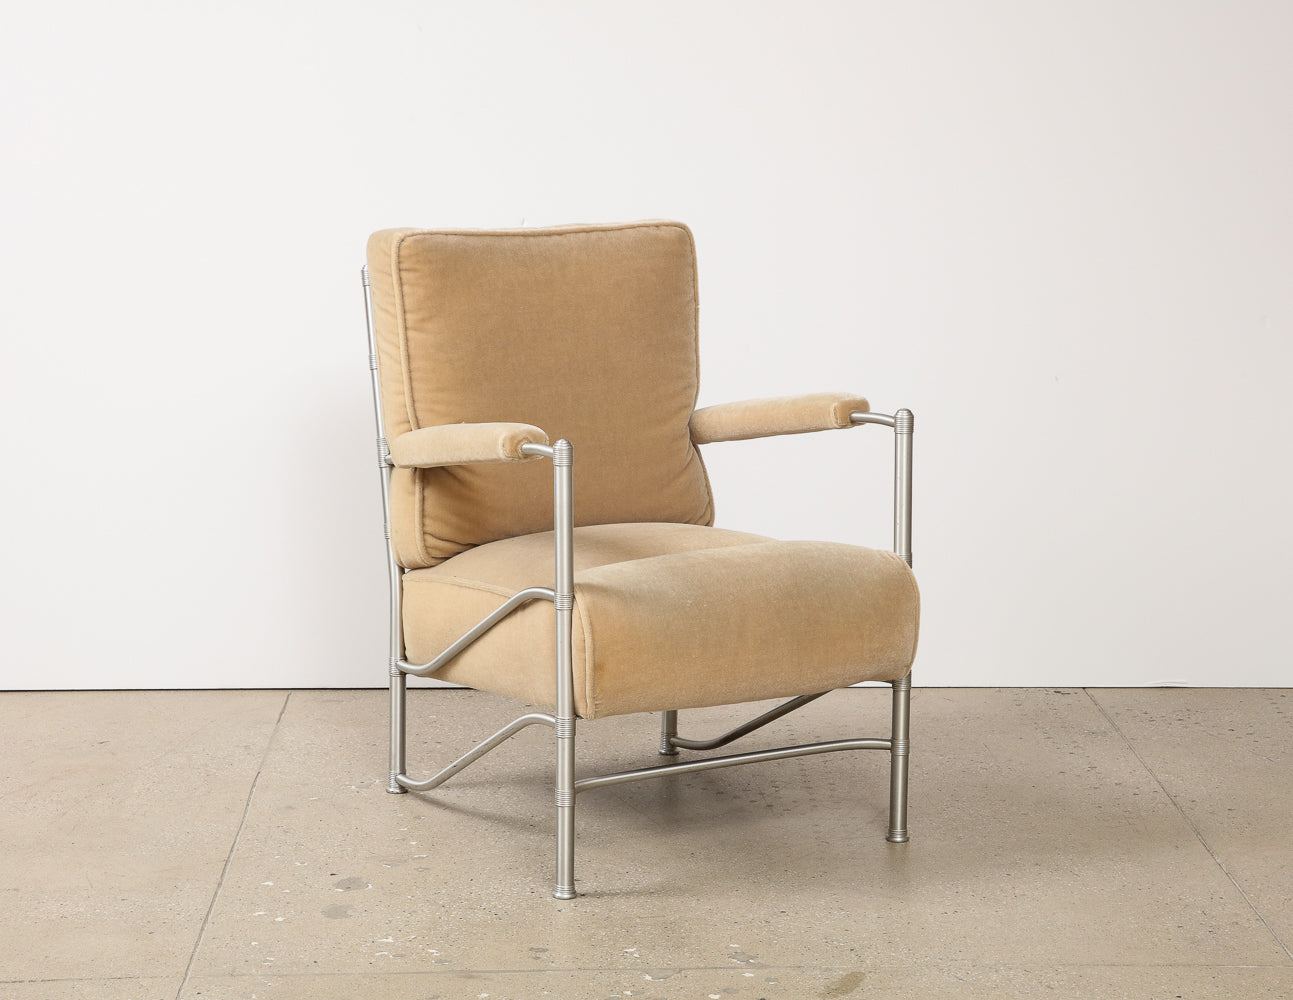 Machine Age Aluminum Lounge Chair by Warren McArthur